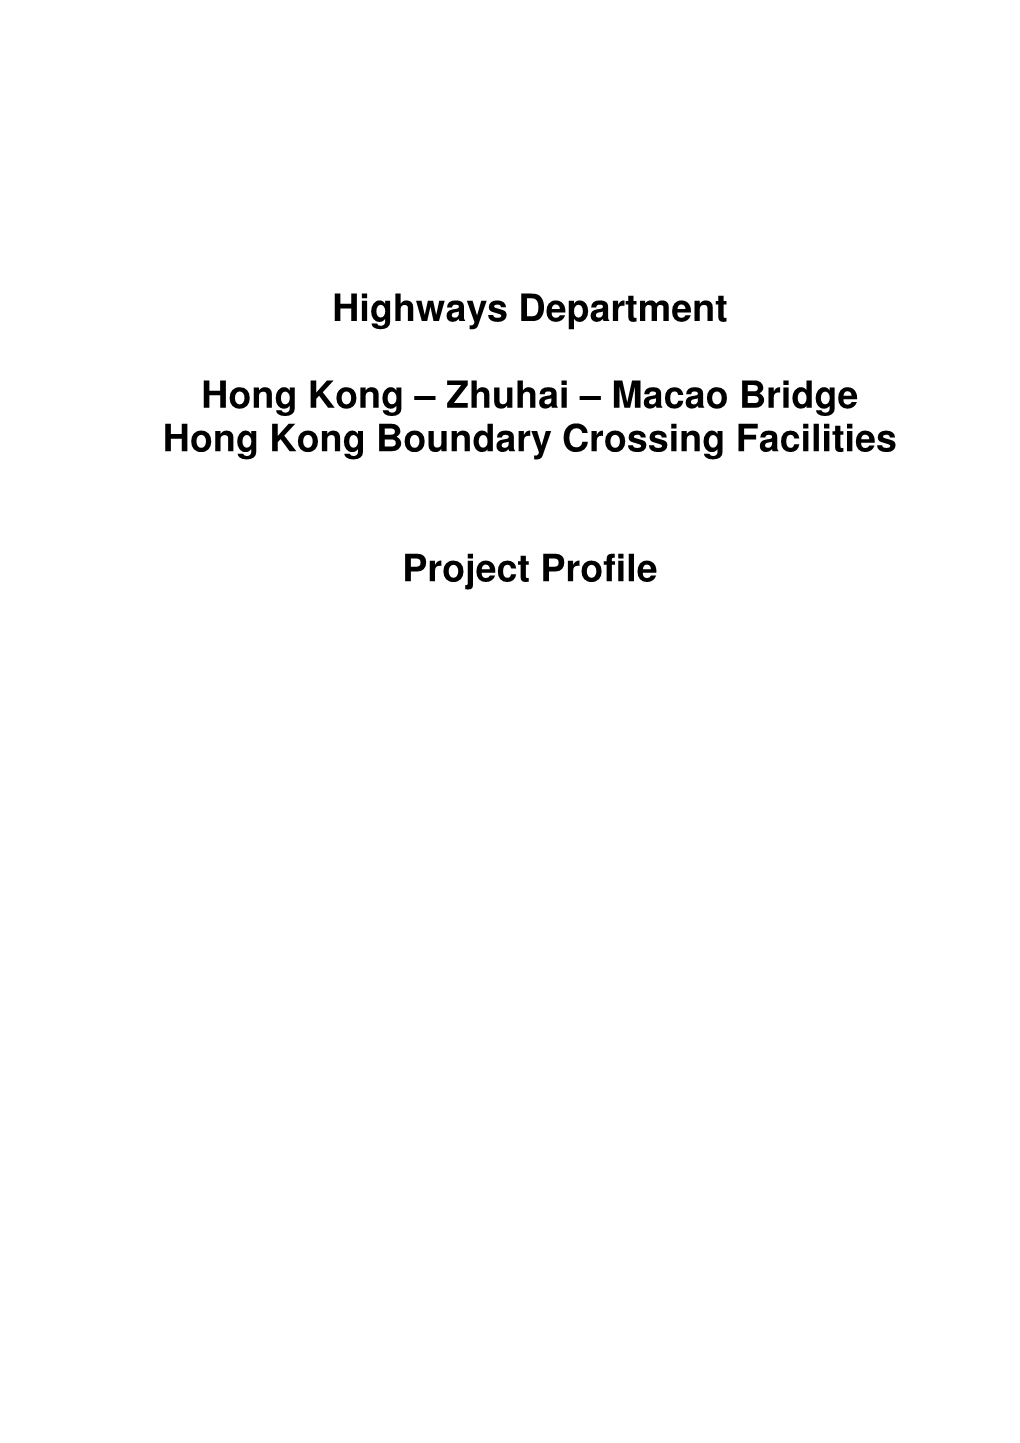 Macao Bridge Hong Kong Boundary Crossing Facilities Project Profile